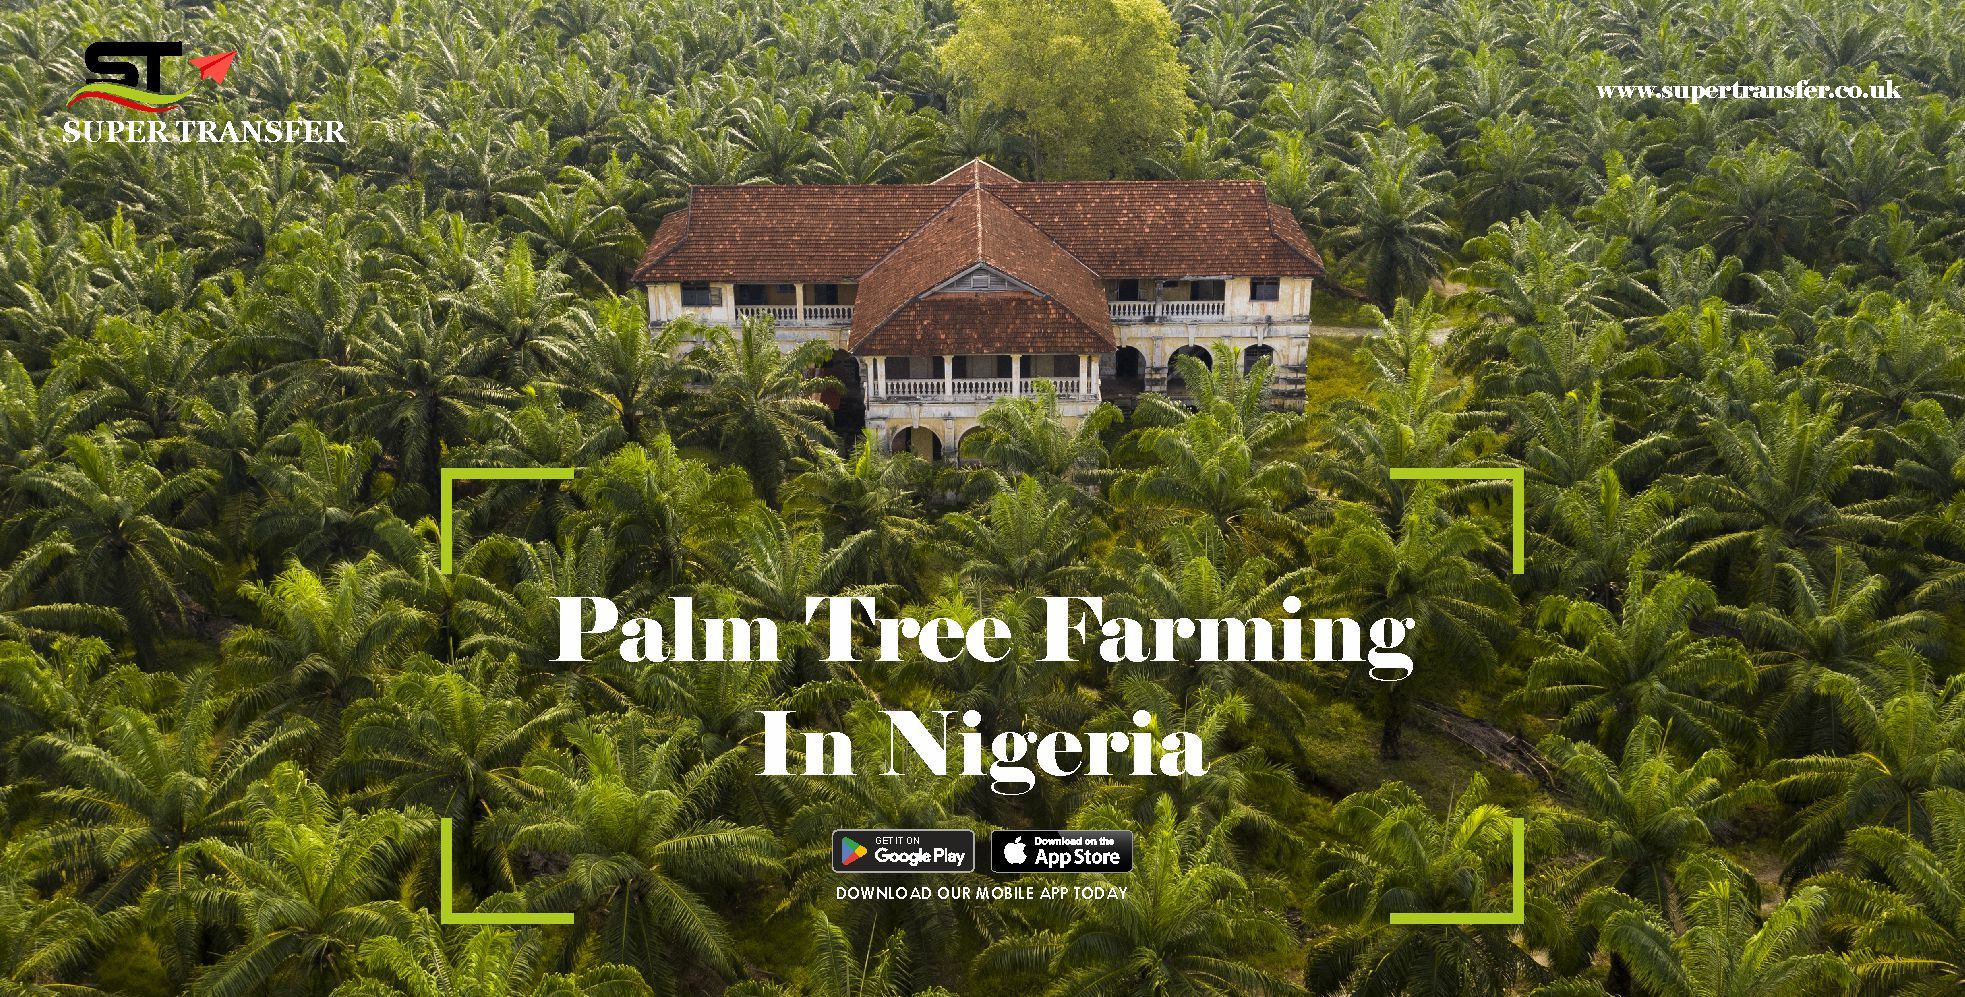 Palm tree farming in Nigeria